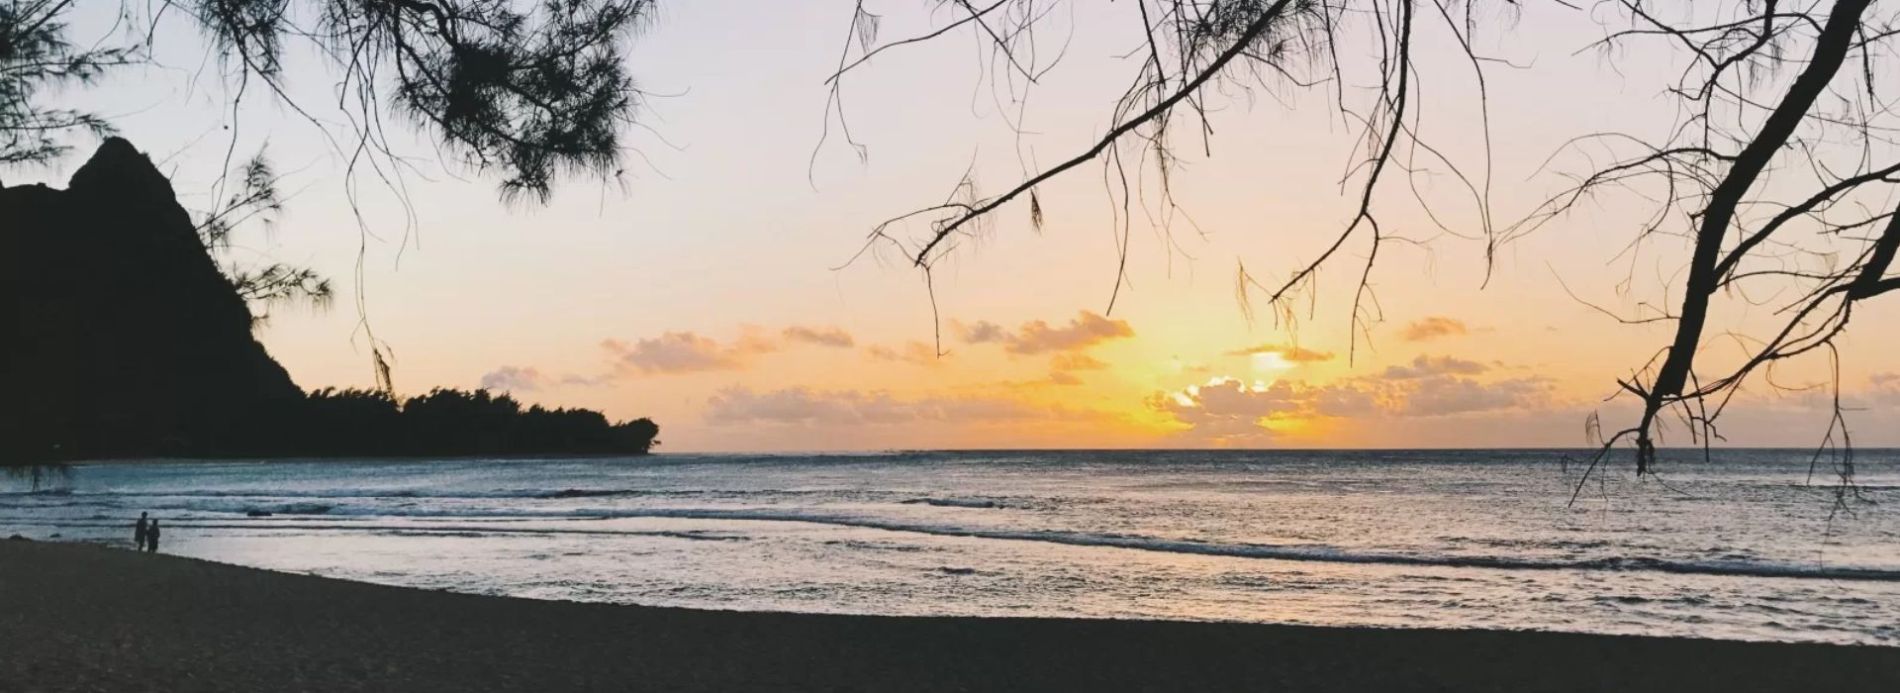 Kauai shore at sunset